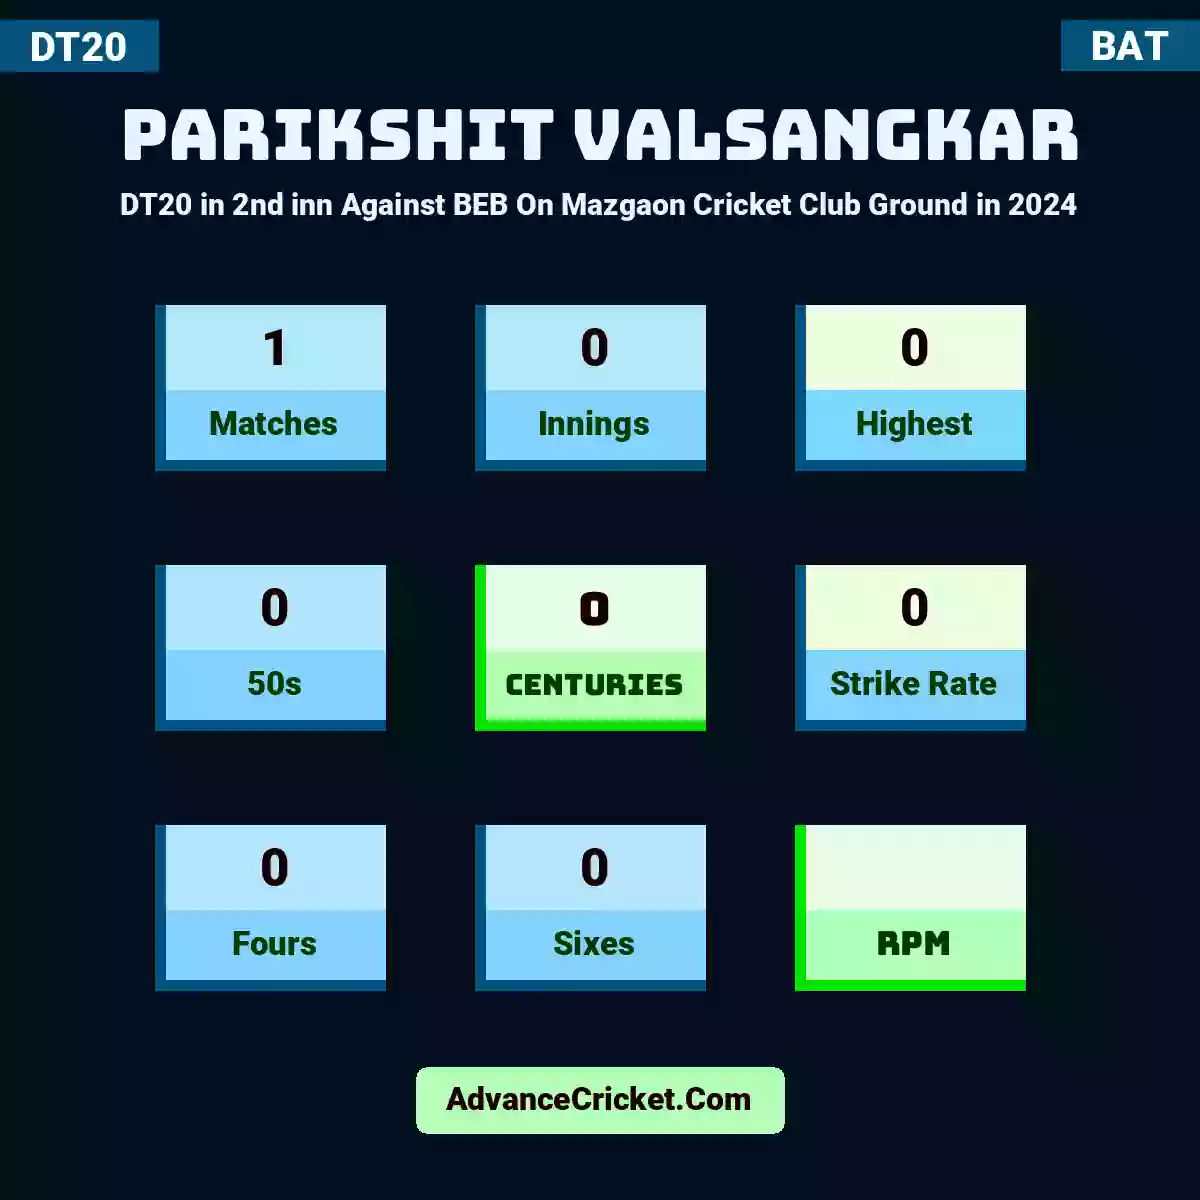 Parikshit Valsangkar DT20  in 2nd inn Against BEB On Mazgaon Cricket Club Ground in 2024, Parikshit Valsangkar played 1 matches, scored 0 runs as highest, 0 half-centuries, and 0 centuries, with a strike rate of 0. P.Valsangkar hit 0 fours and 0 sixes.